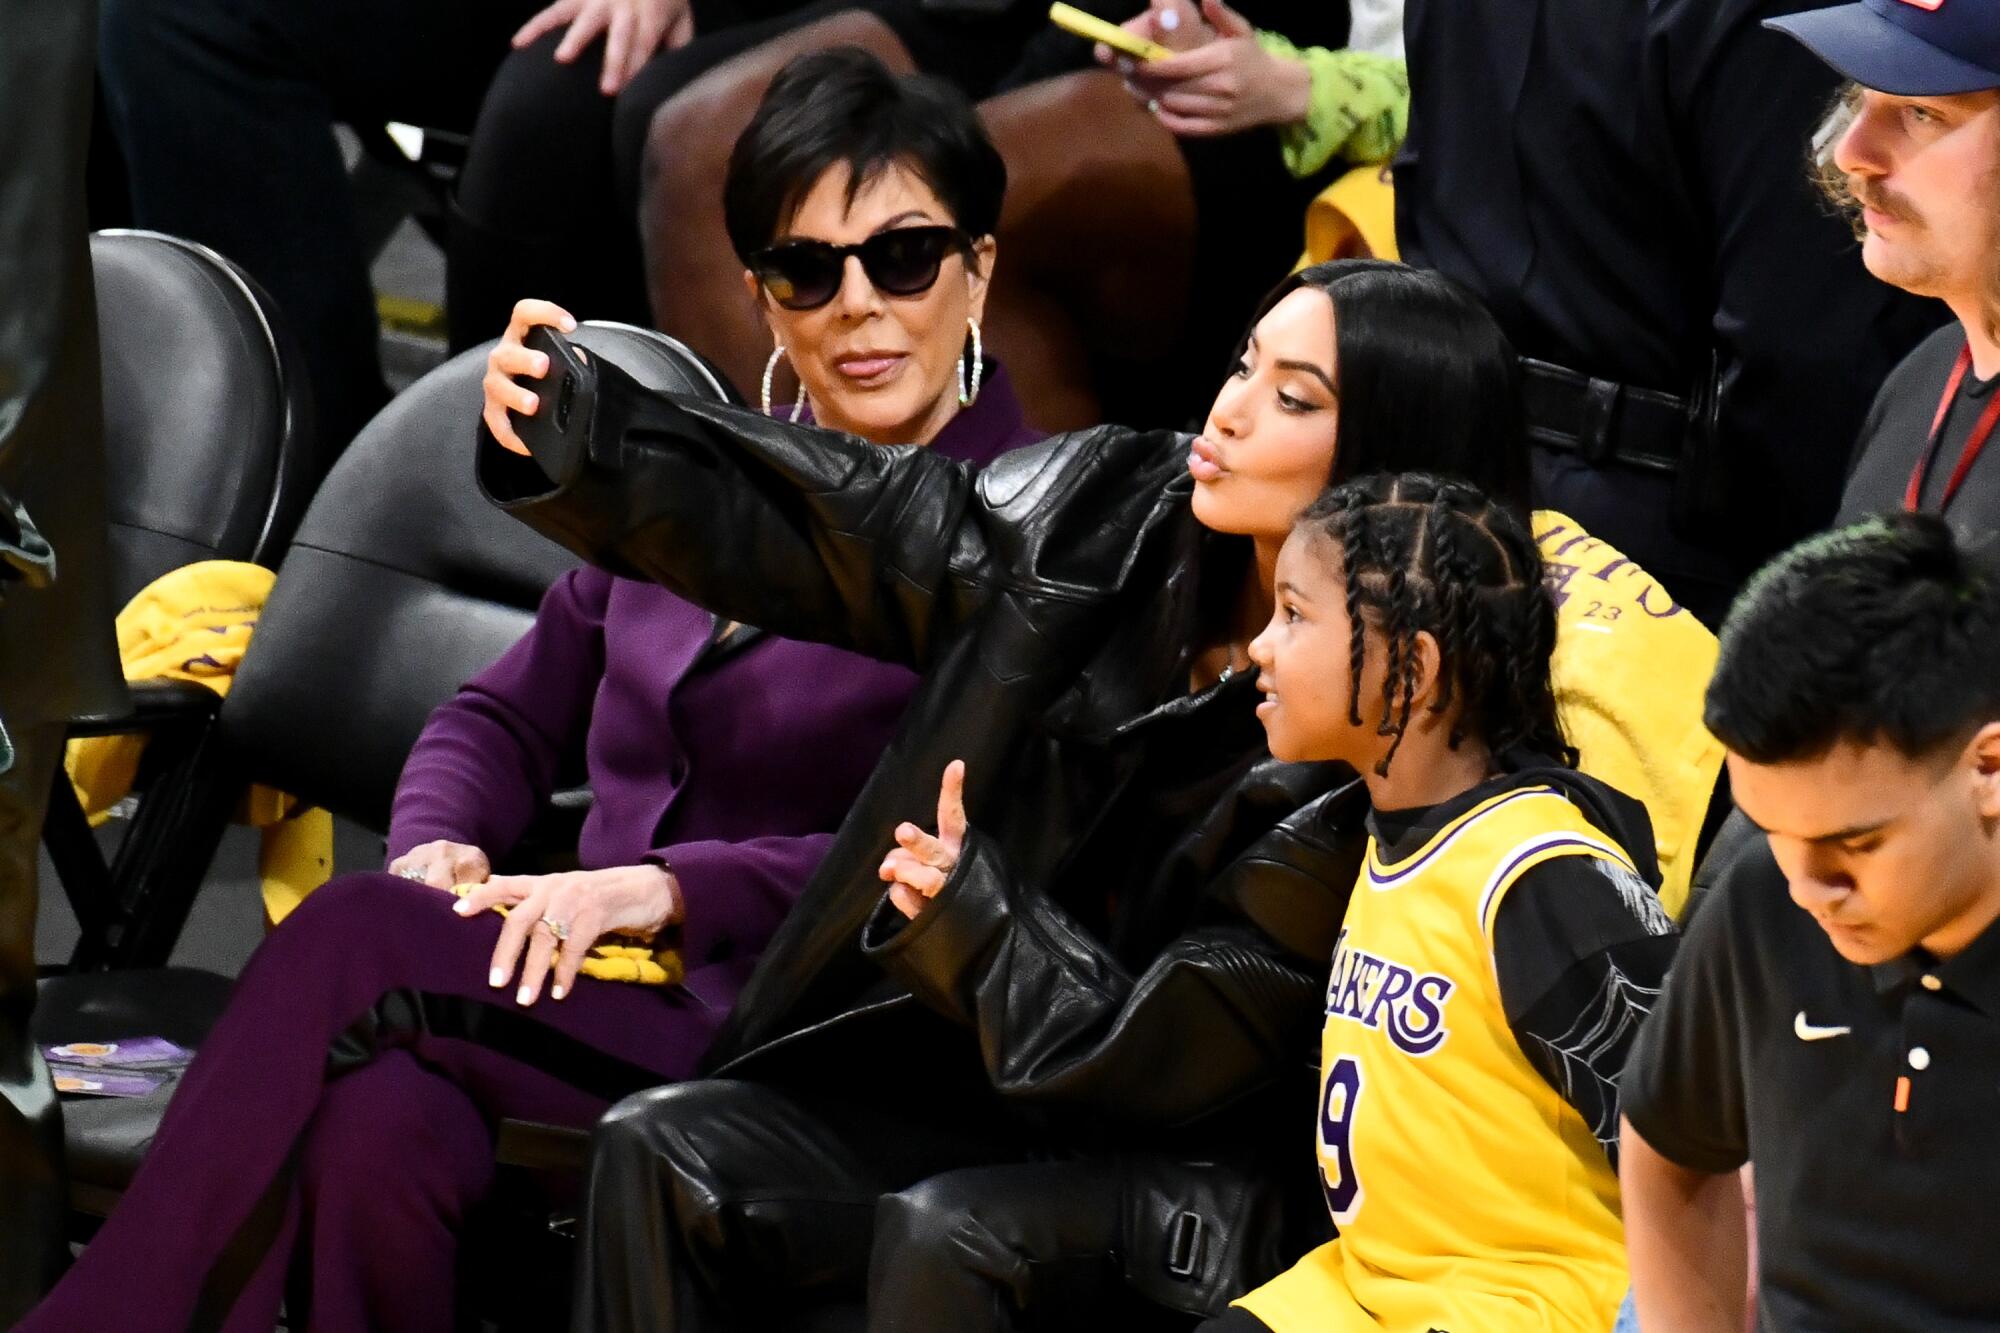 Kris Jenner watches Kim Kardashian takes a selfie with Saint West